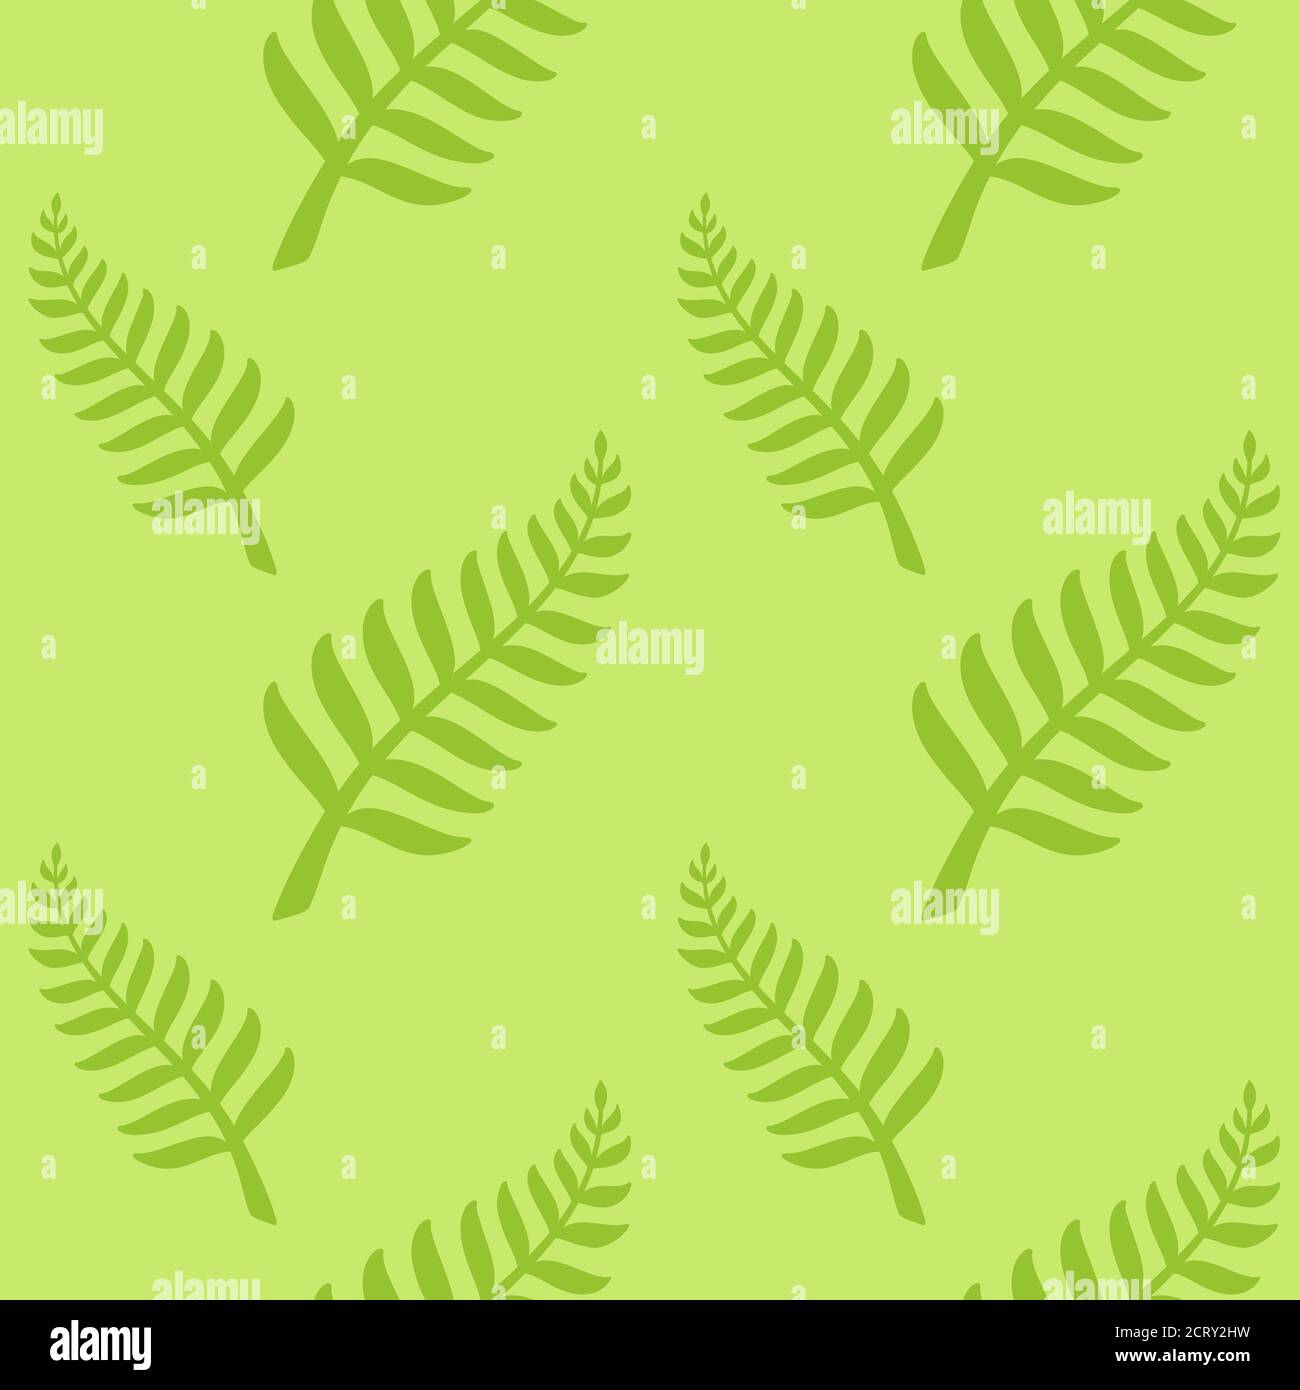 Farnblatt nahtloses Muster. Grün wiederholenden Hintergrund der silbernen Farn Blätter Silhouette. Vektorgrafik. Stock Vektor